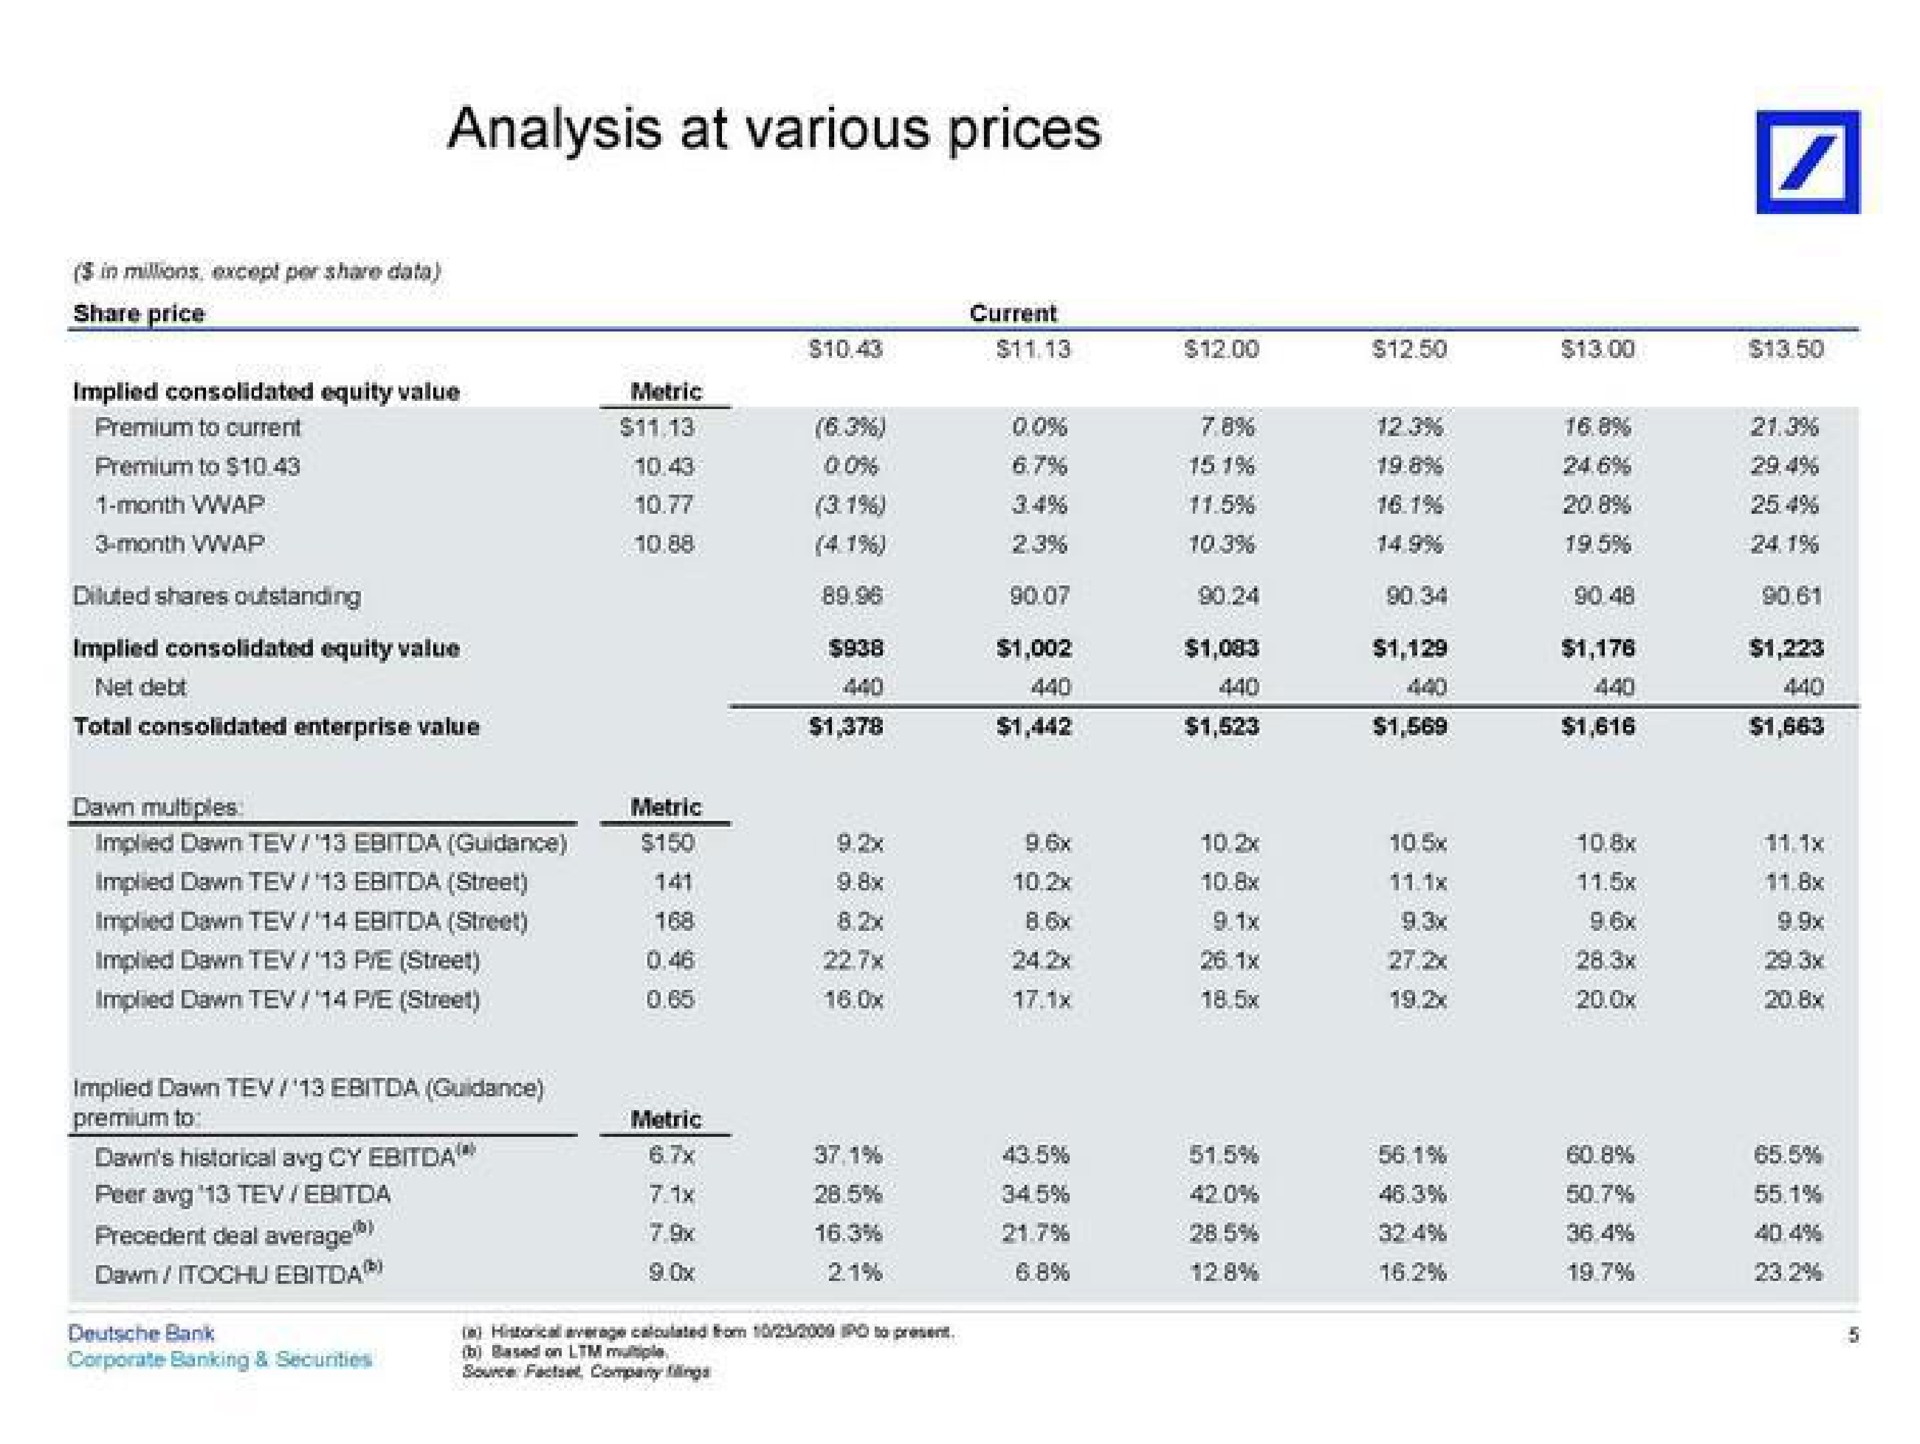 analysis at various prices | Deutsche Bank